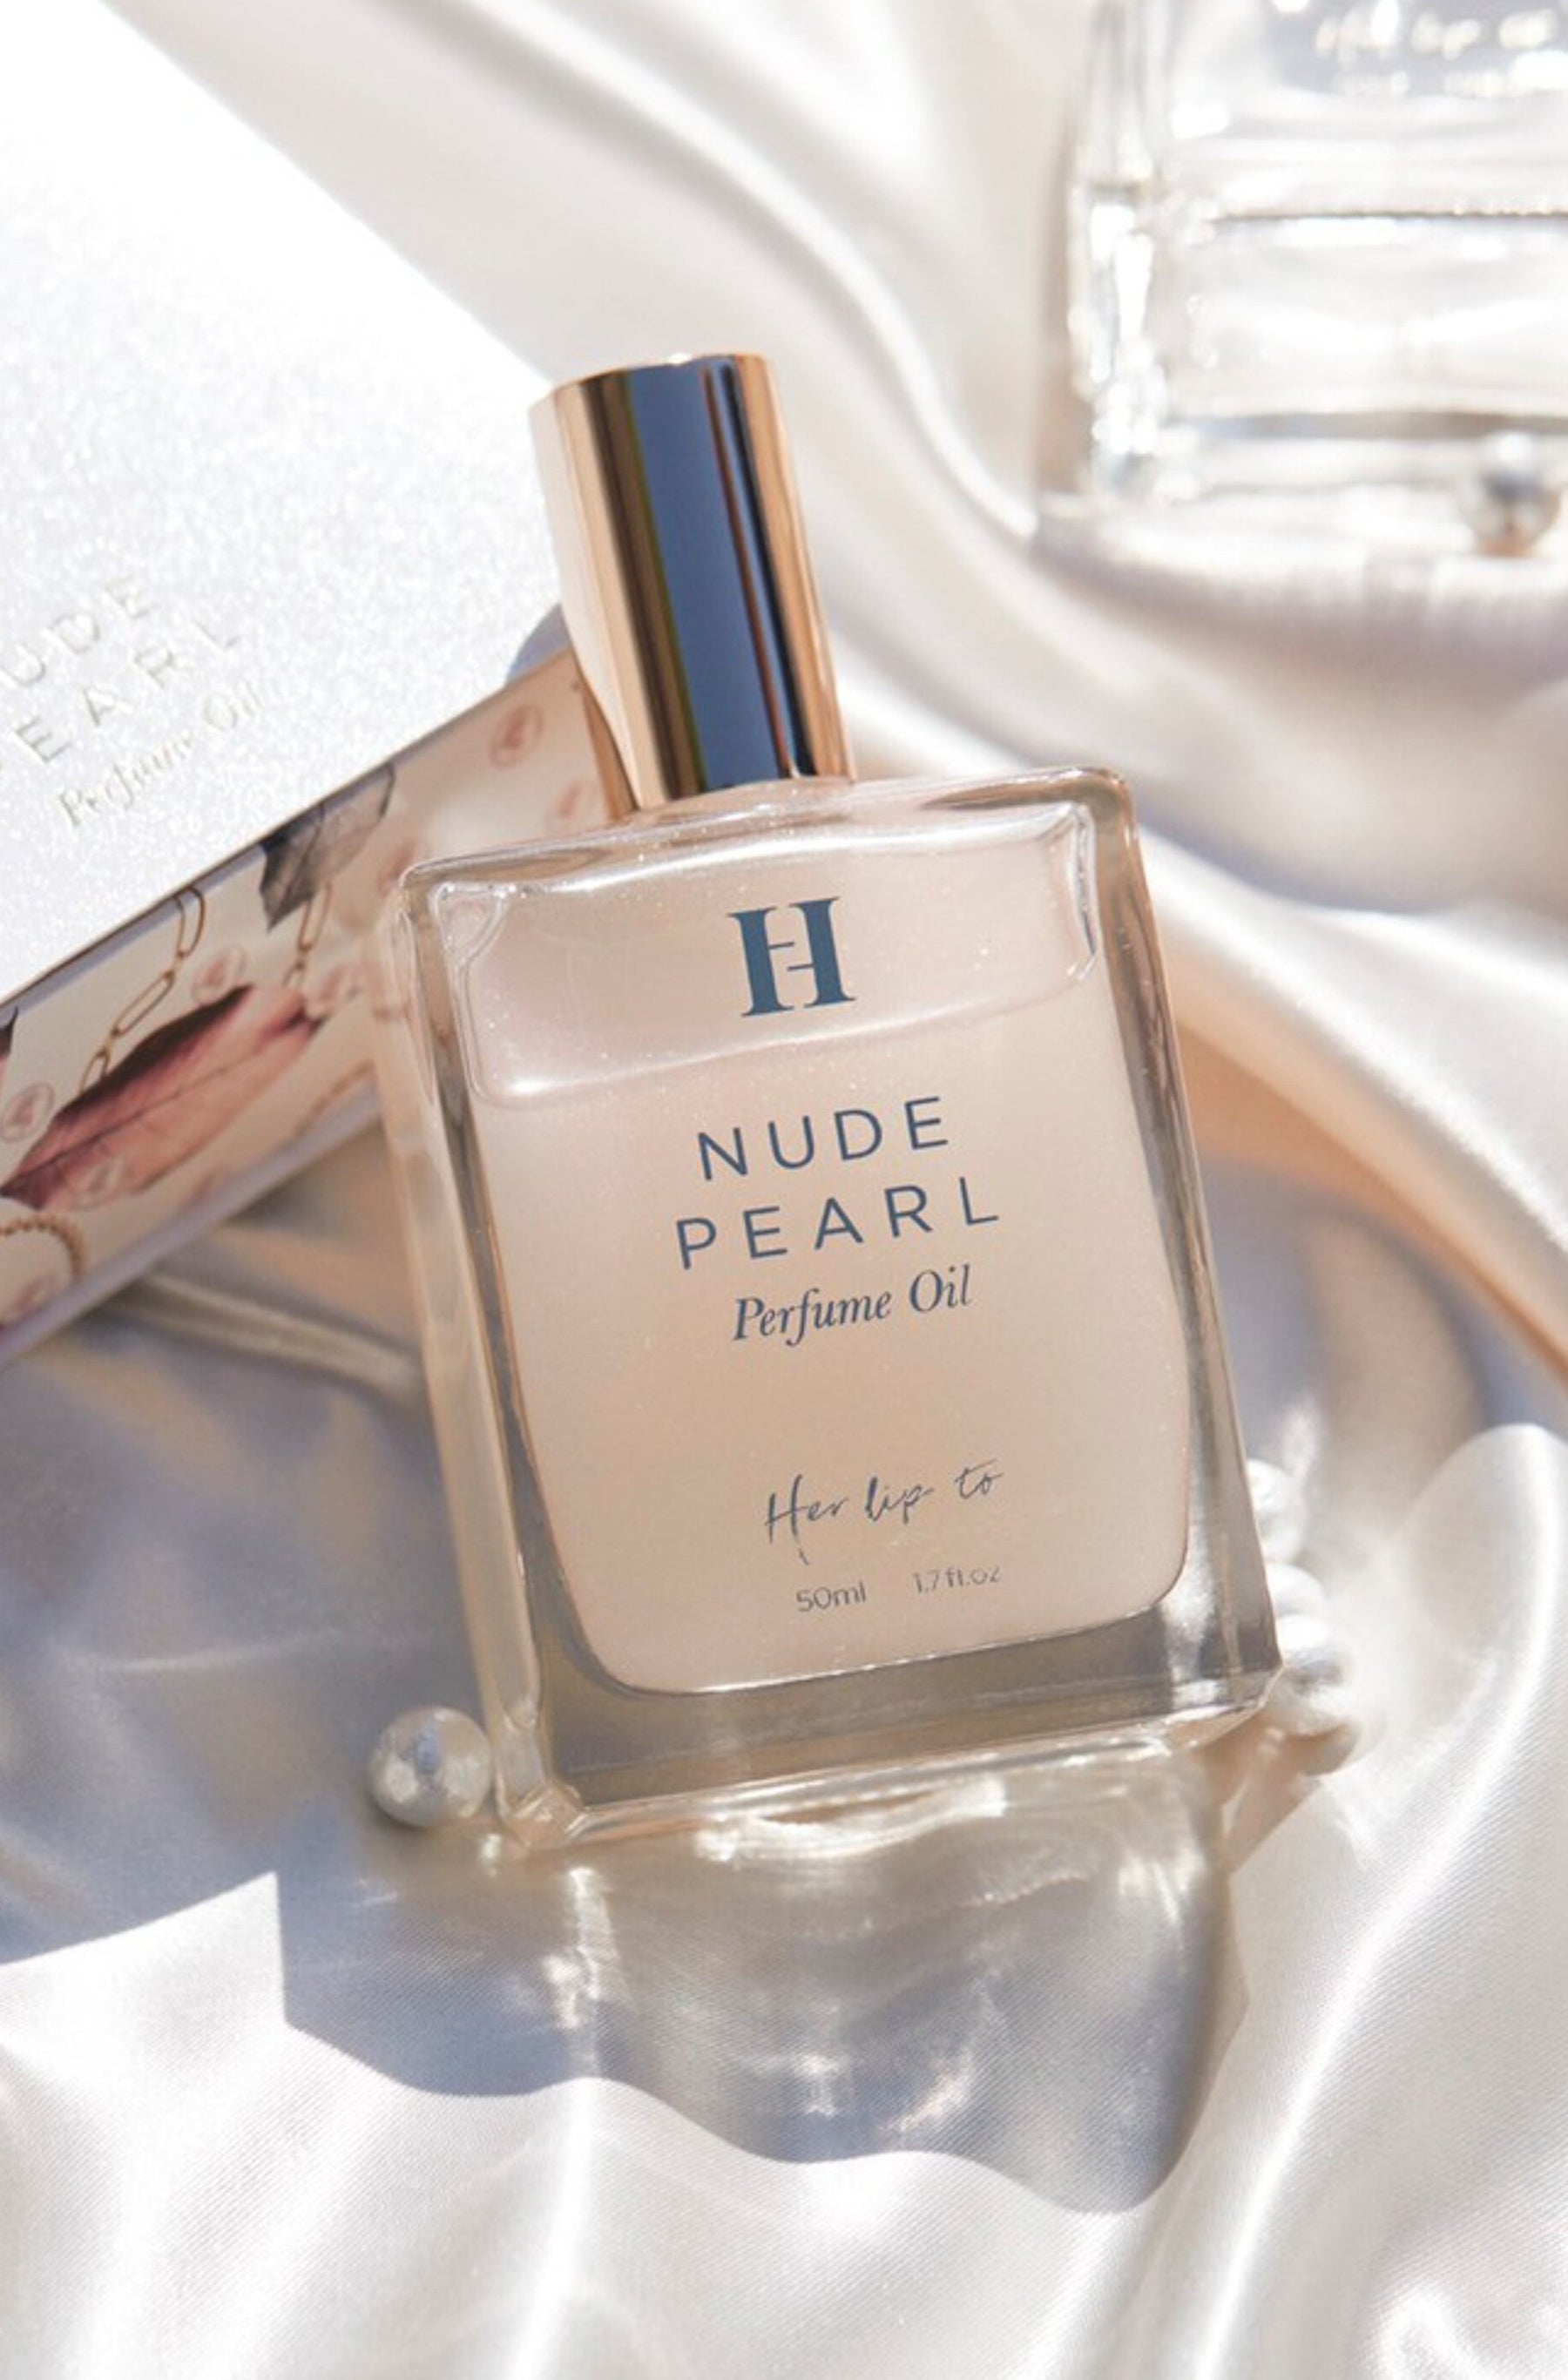 Her lip to Perfume Oil - Nude Pearl-